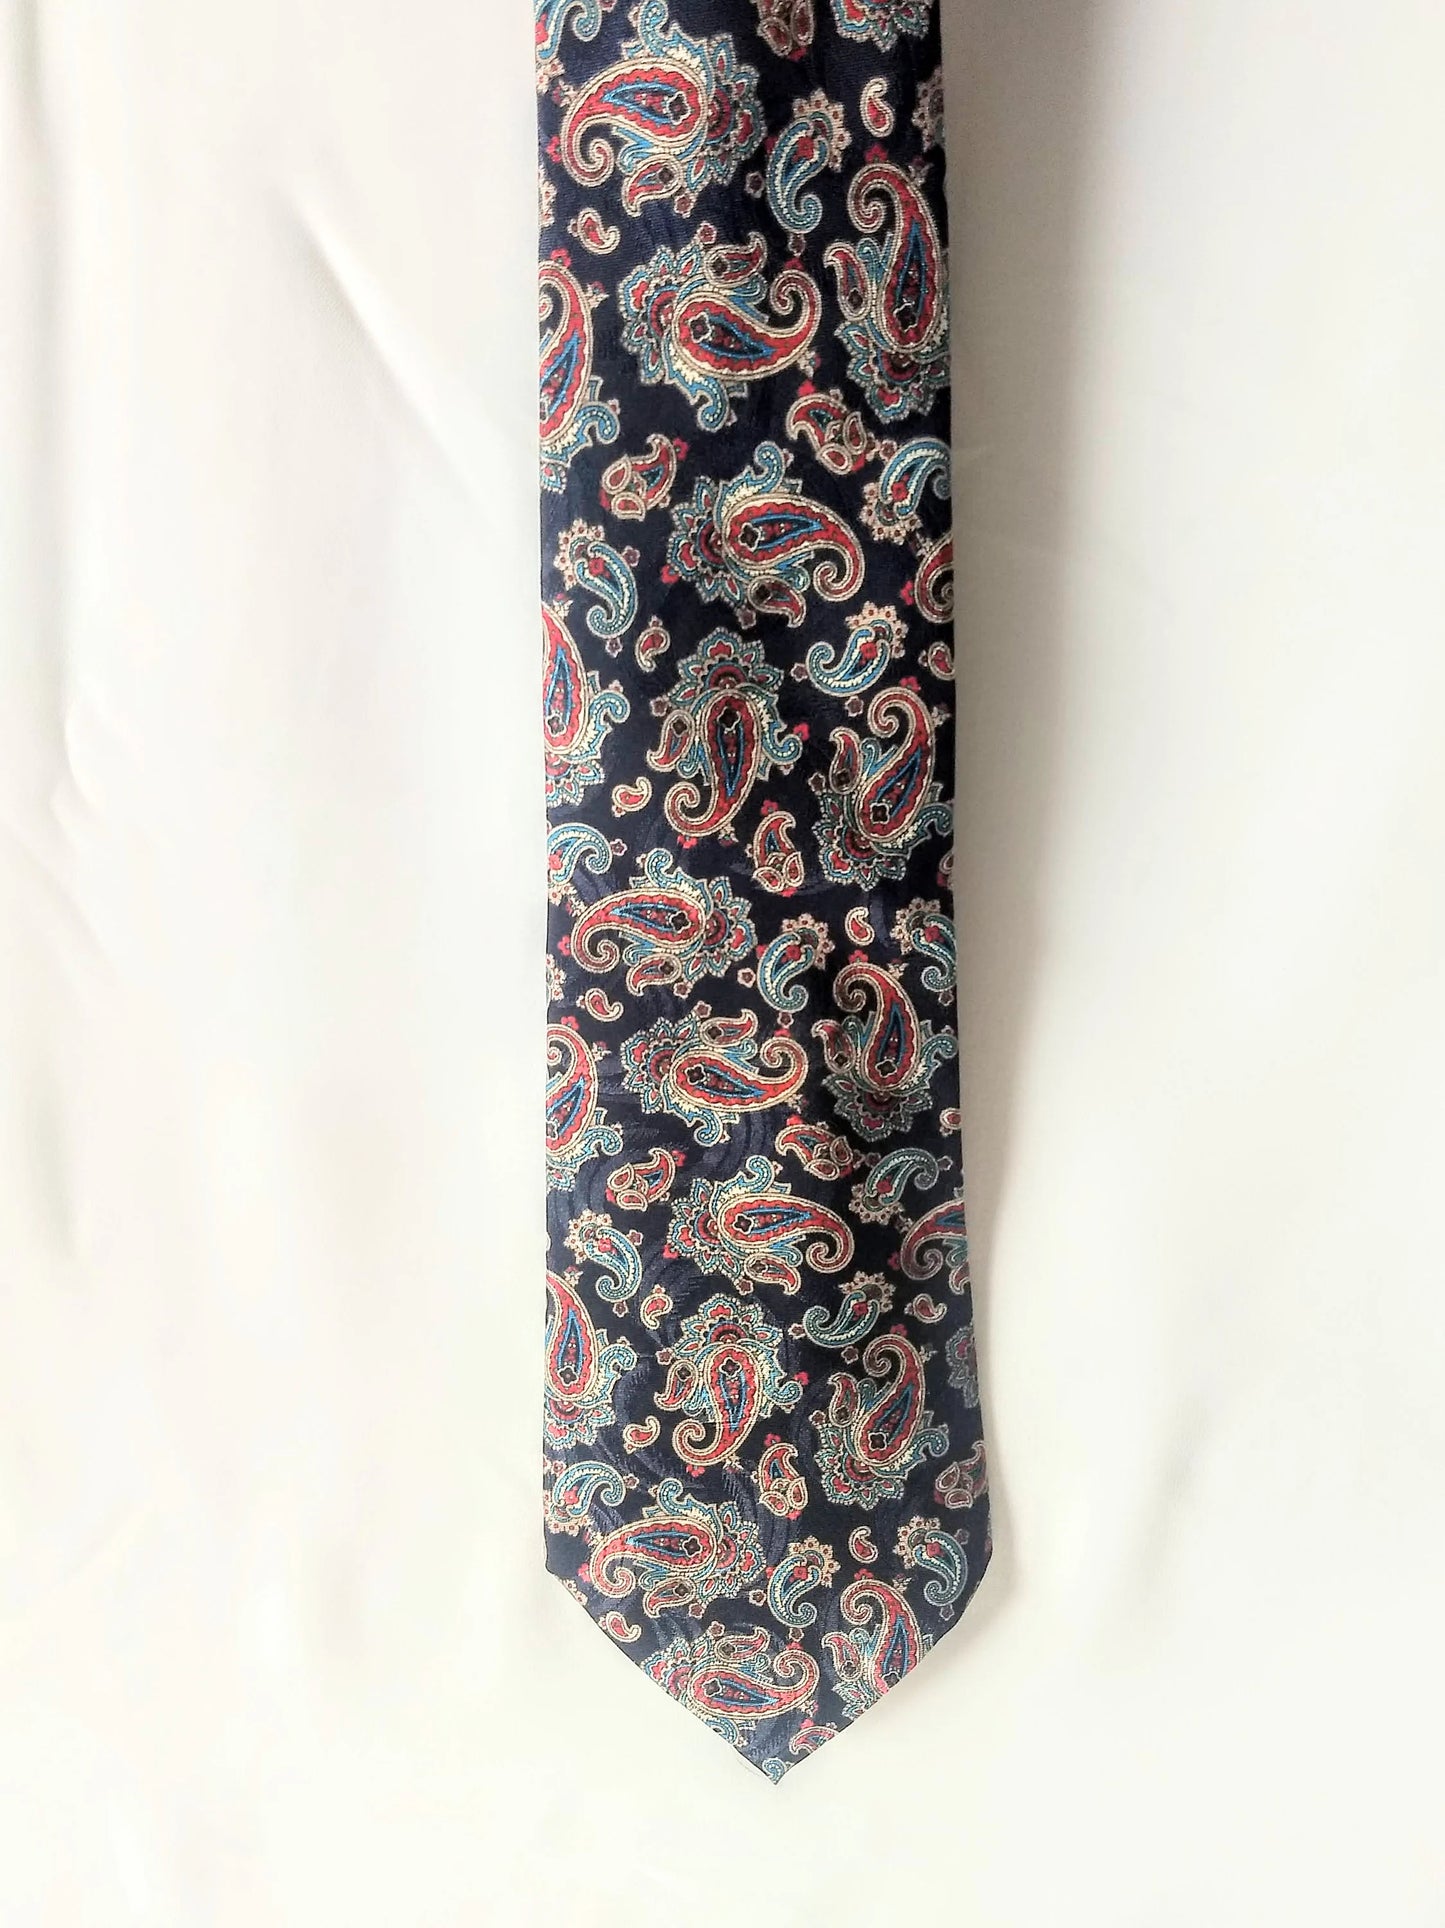 Vintage Men's Paisley Tie